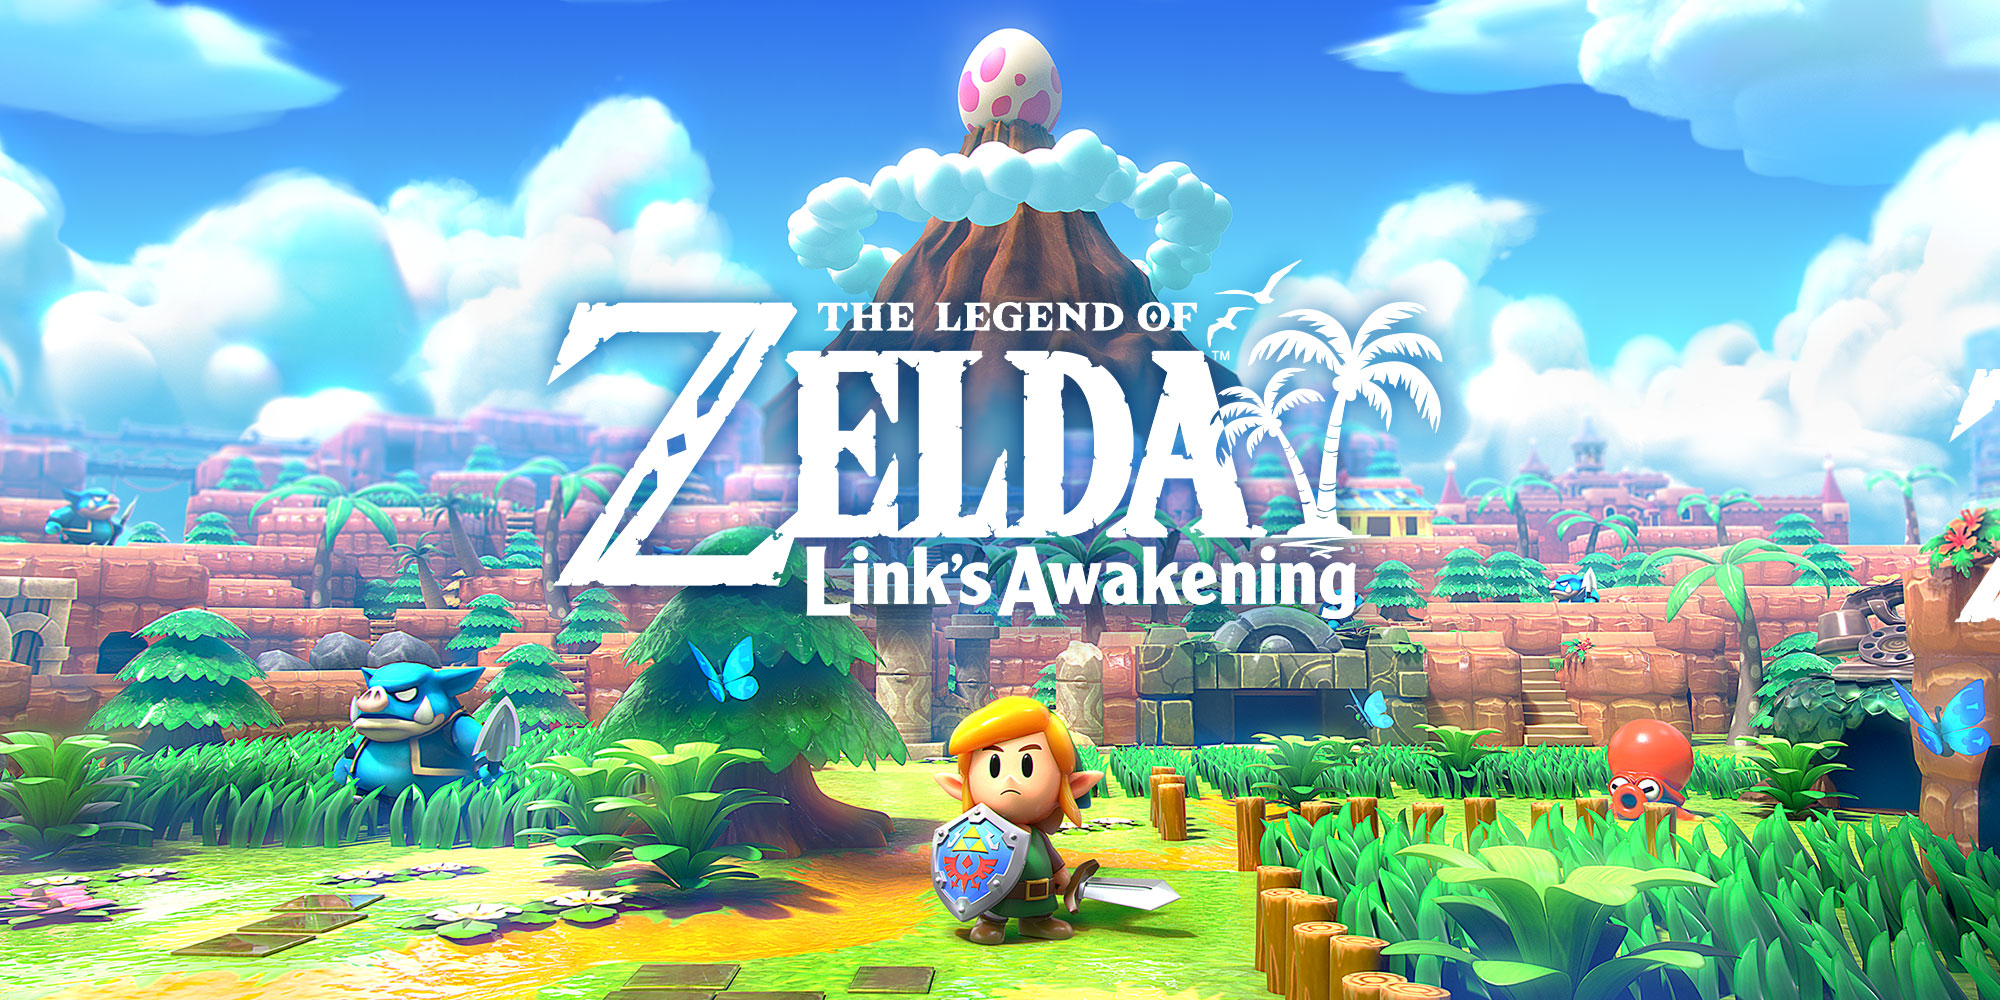 Scopri di più su The Legend of Zelda: Link’s Awakening dal producer della serie Eiji Aonuma!